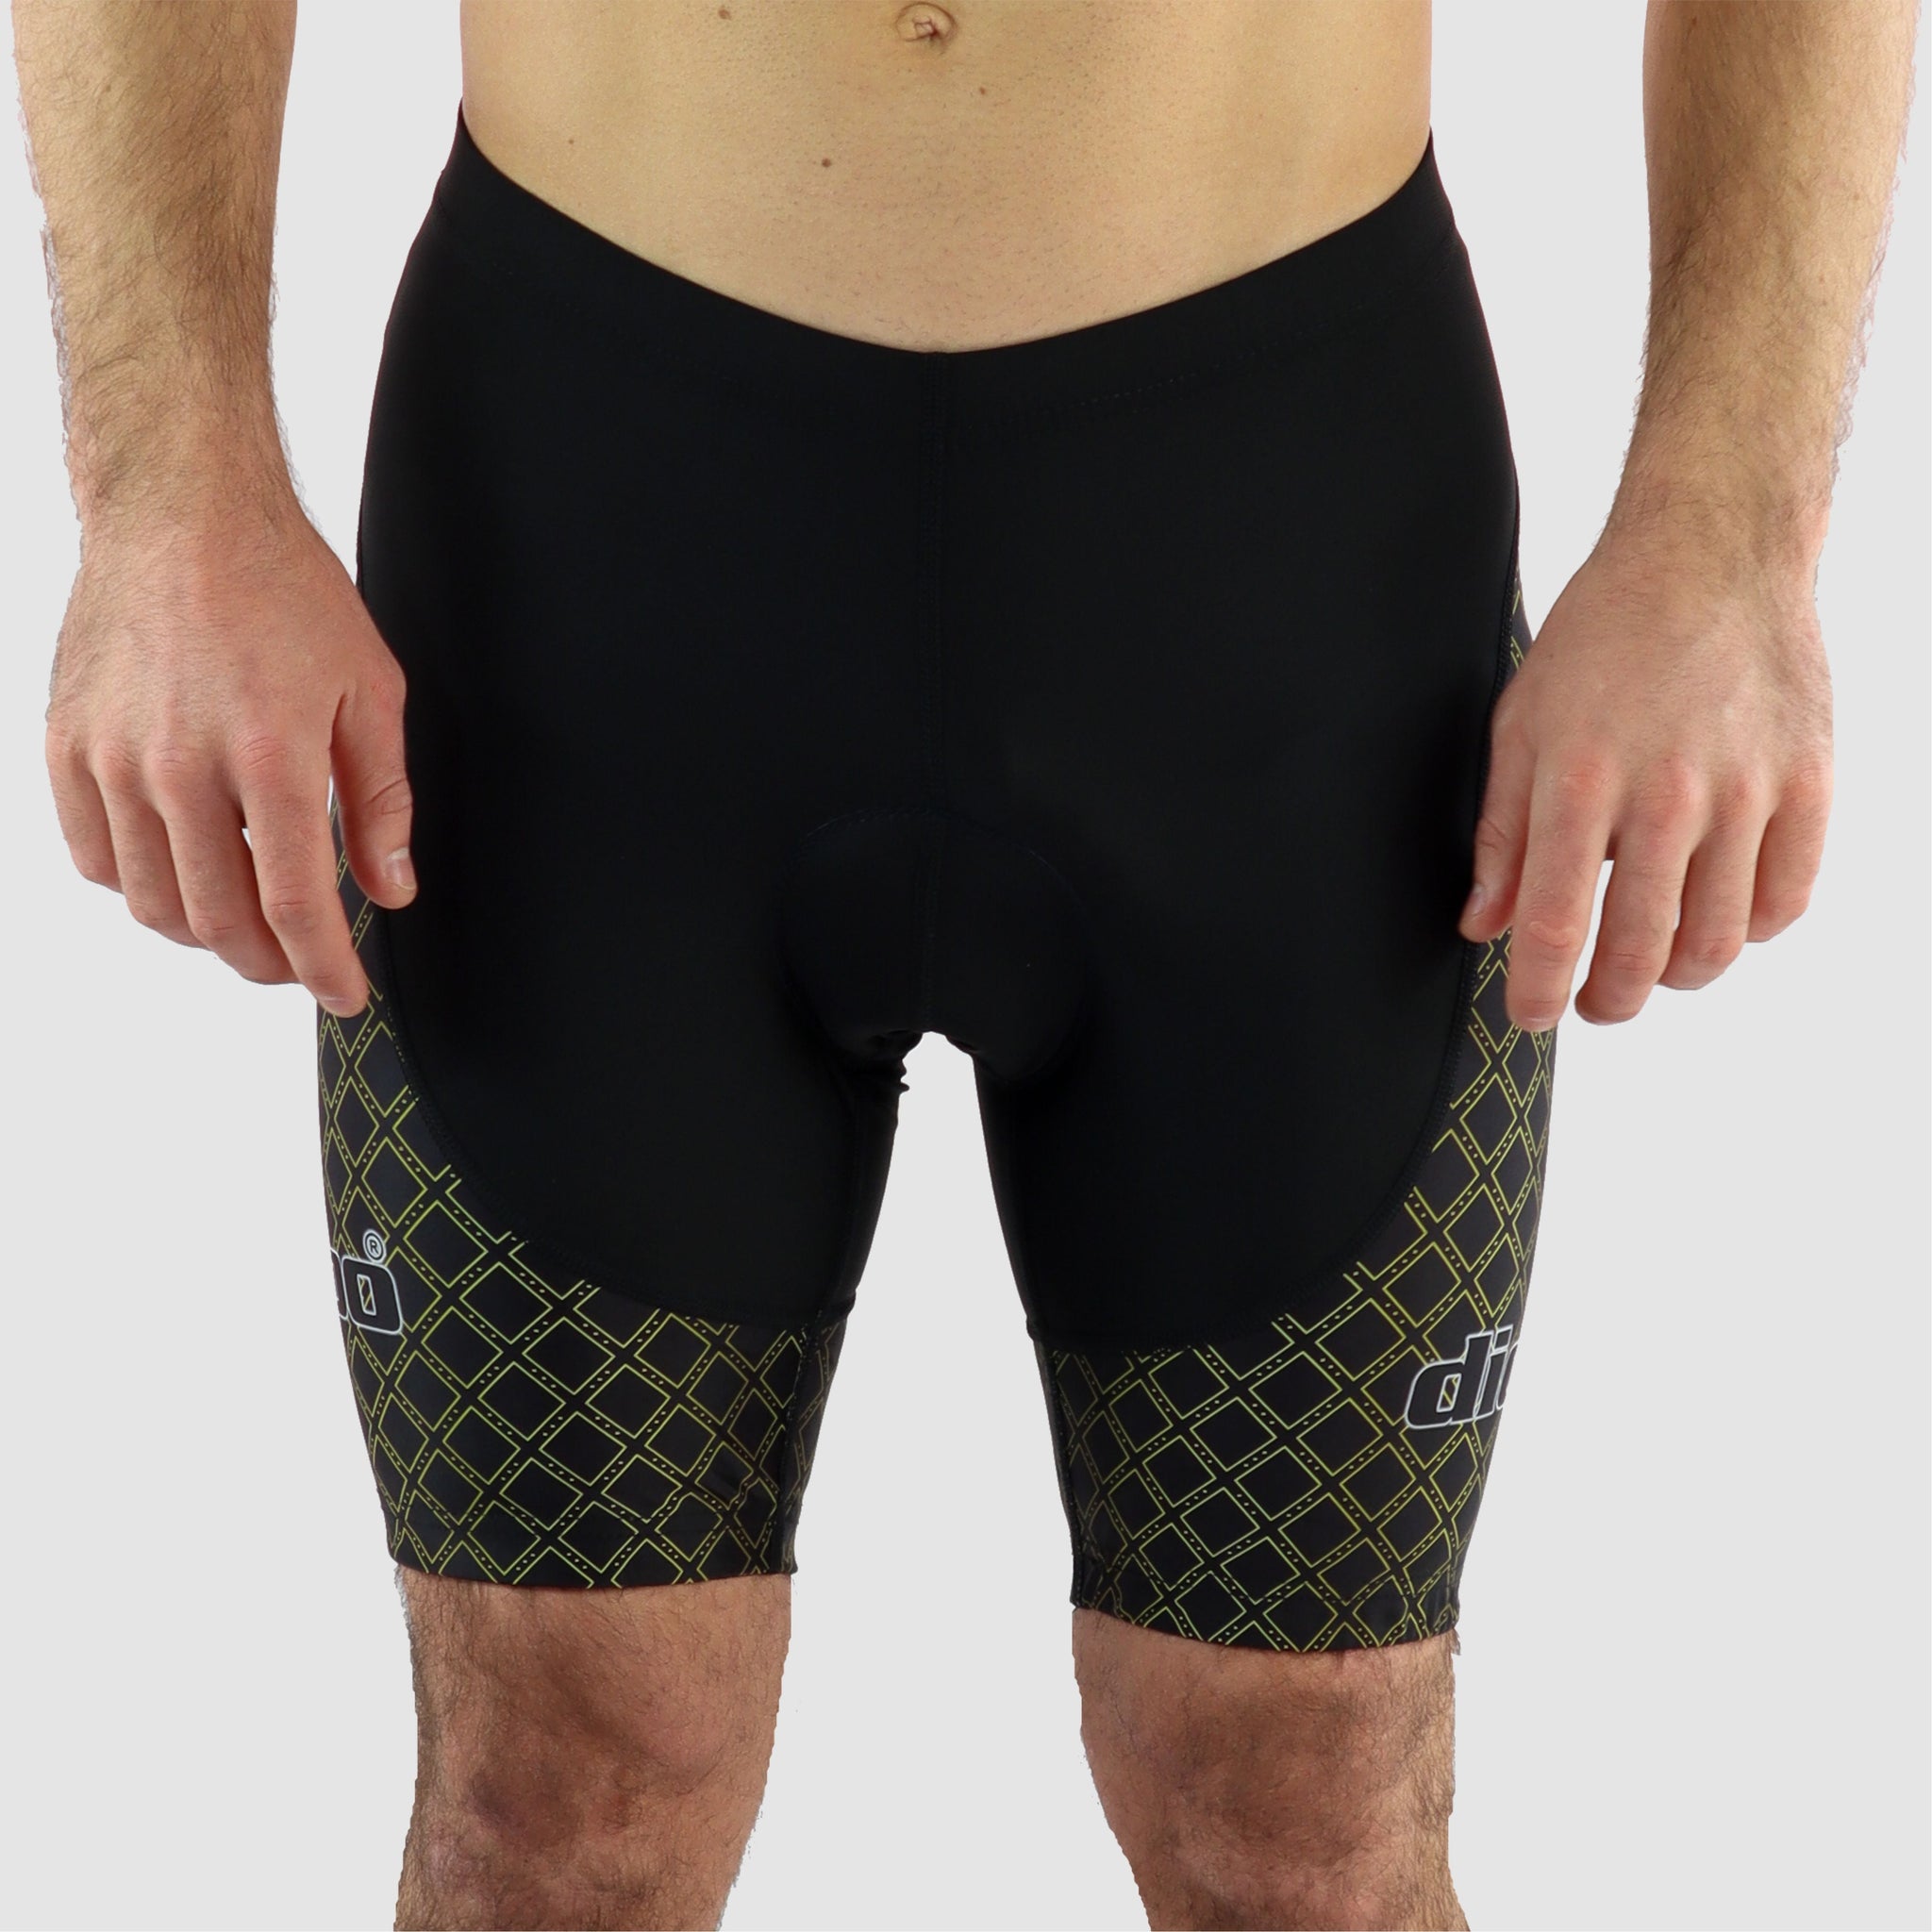 DiDOO Men's Classic Quick Dry Padded Cycling Shorts Black